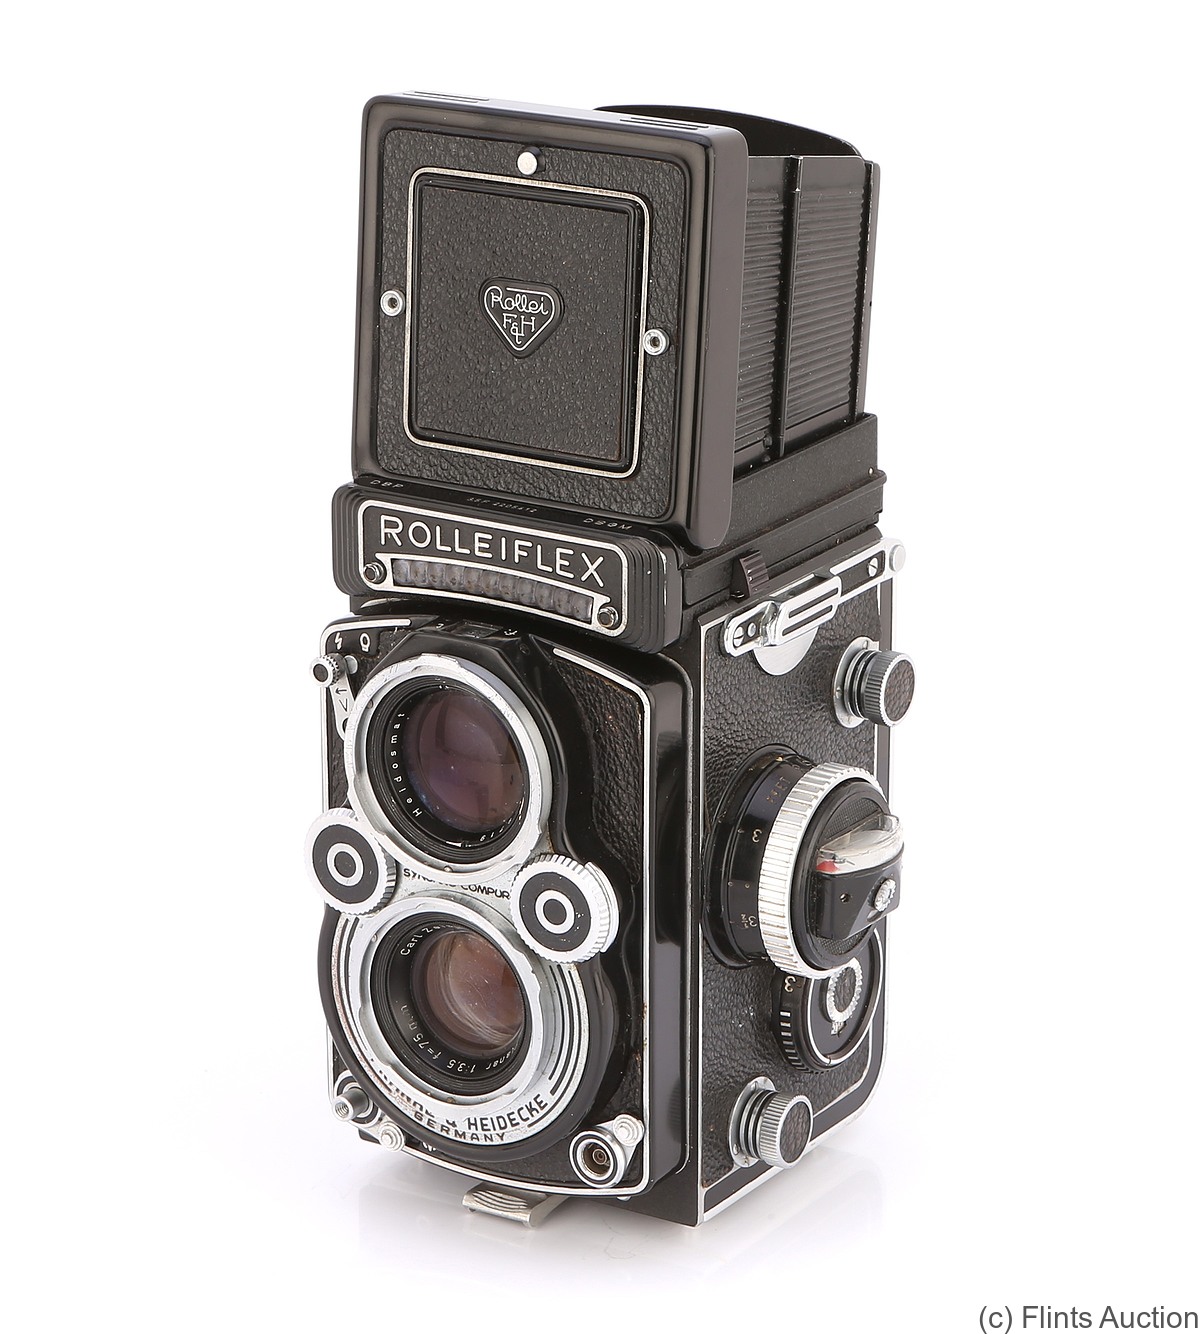 Rollei: Rolleiflex 3.5 F camera